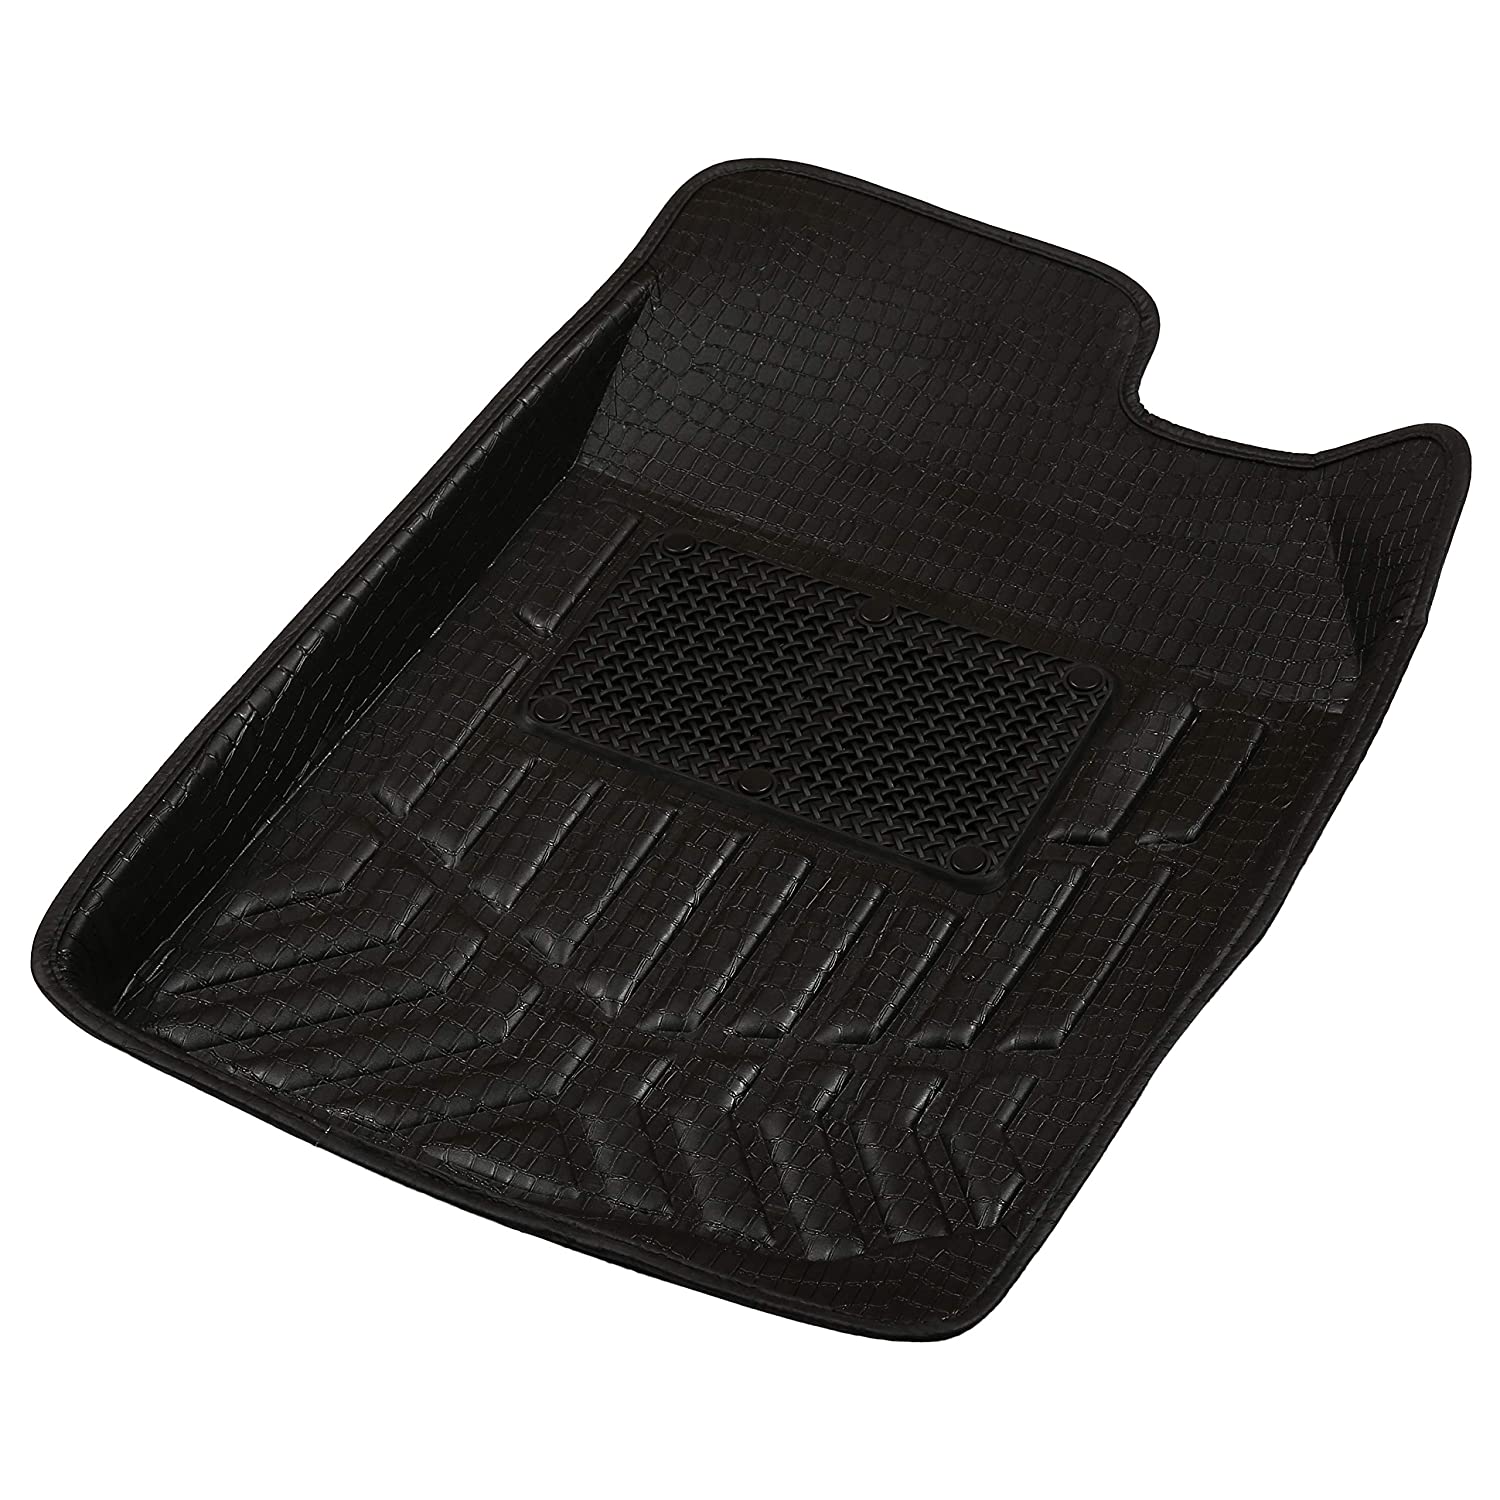 Drivn 3D Customised Car Floor Mat for Hyundai Grand i10 - Black (Set of 3)